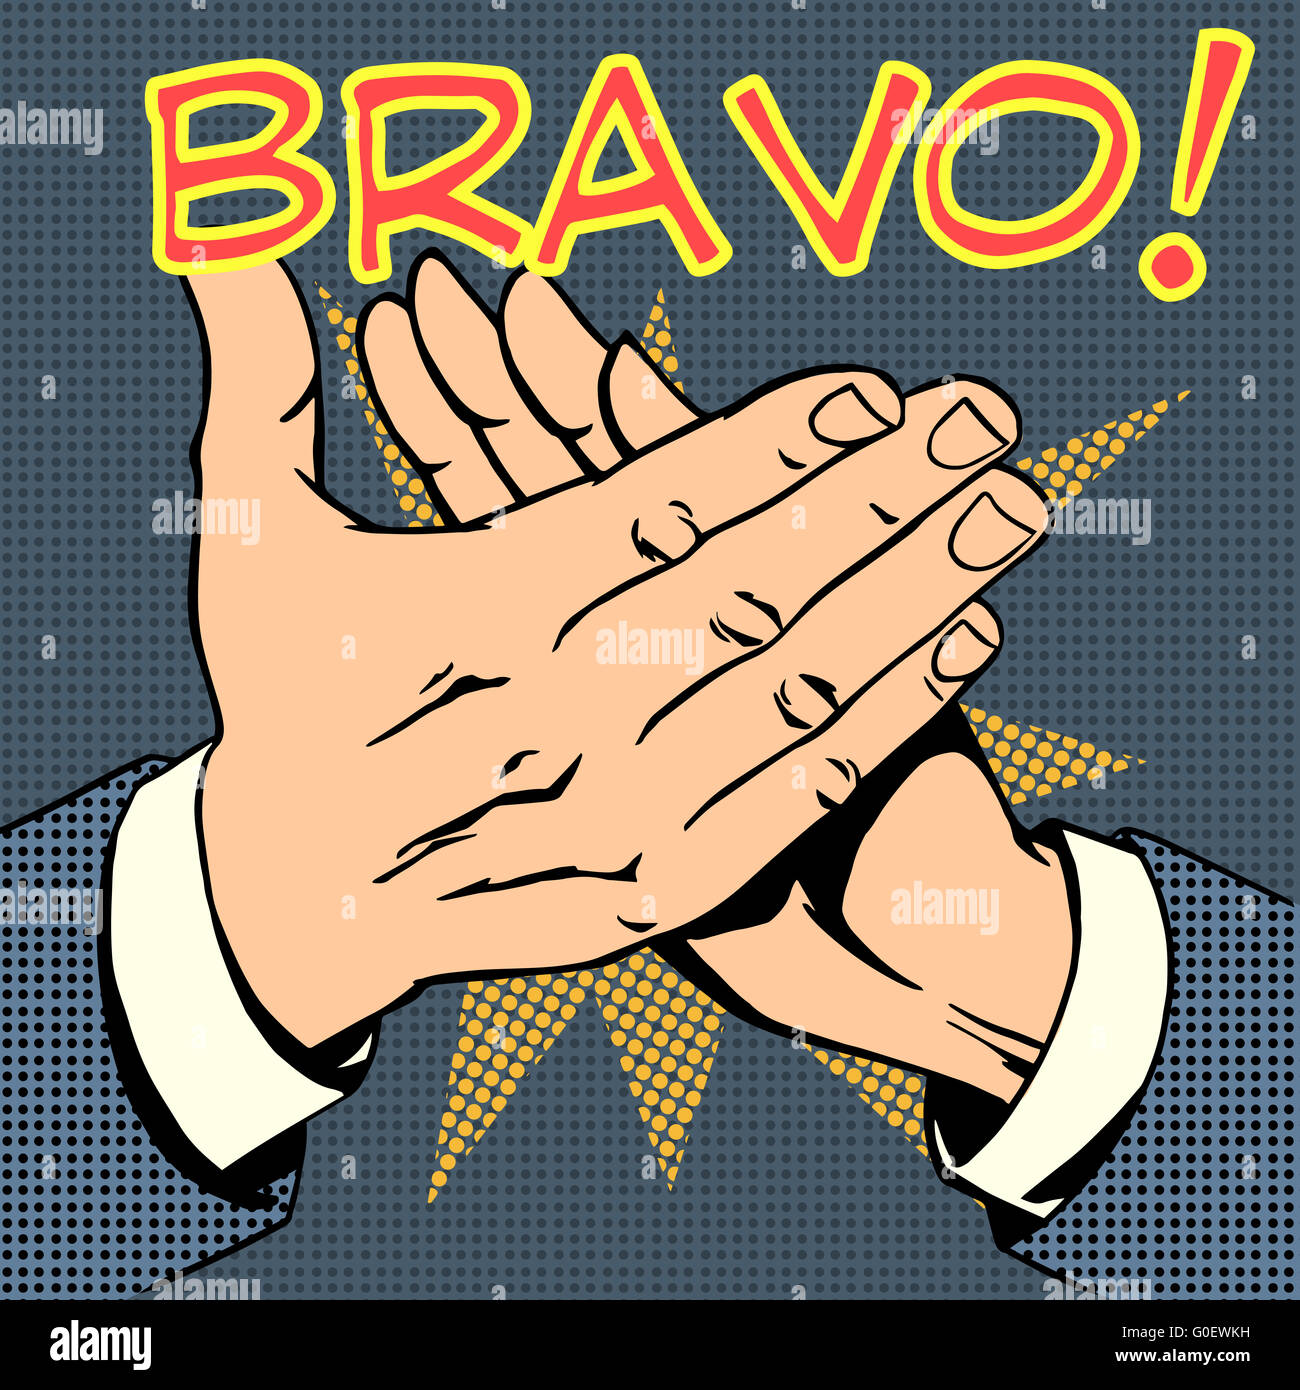 hands palm applause success text Bravo Stock Photo